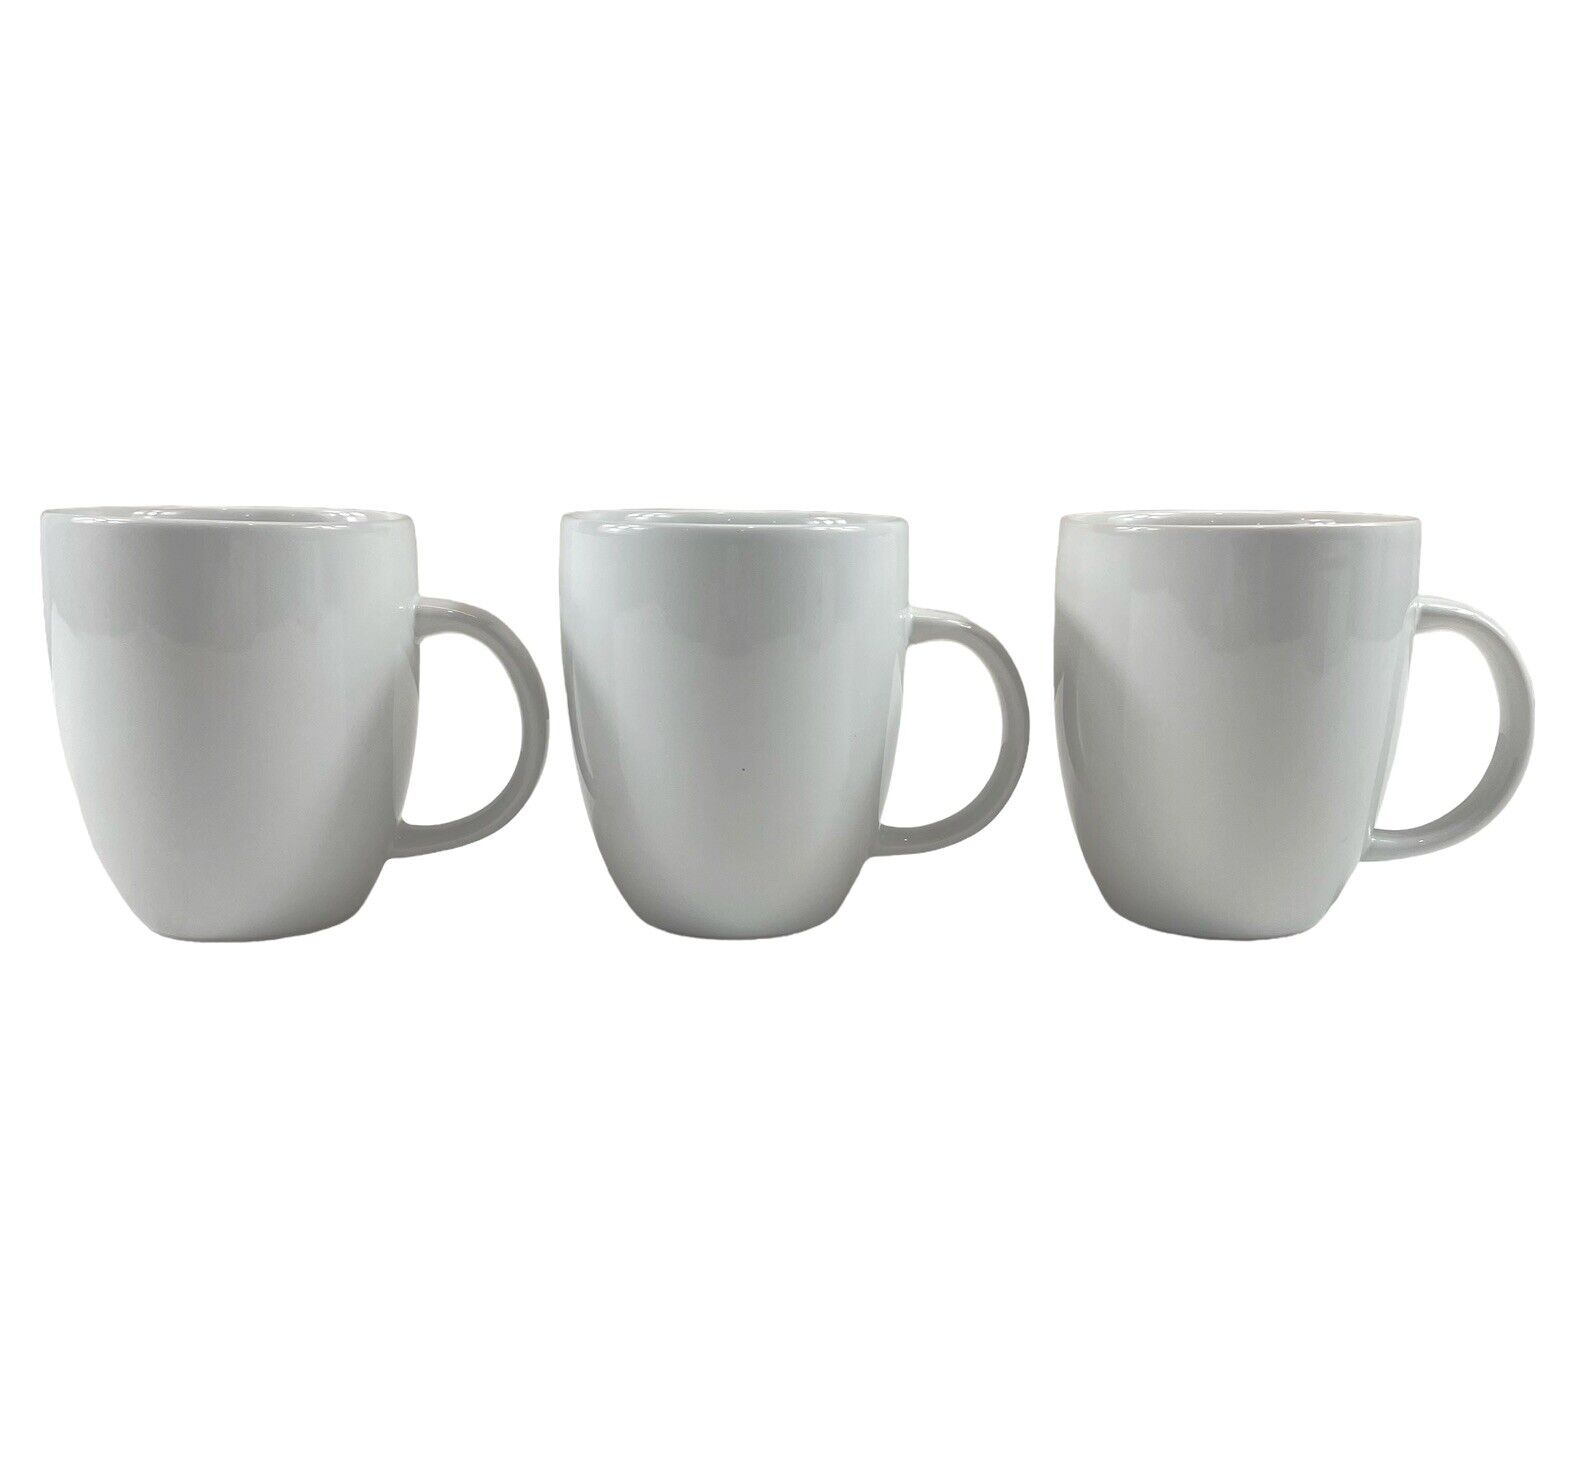 THRESHOLD Coupe White Porcelain Coffee Mugs Tea Cups Large 16oz Set of 3